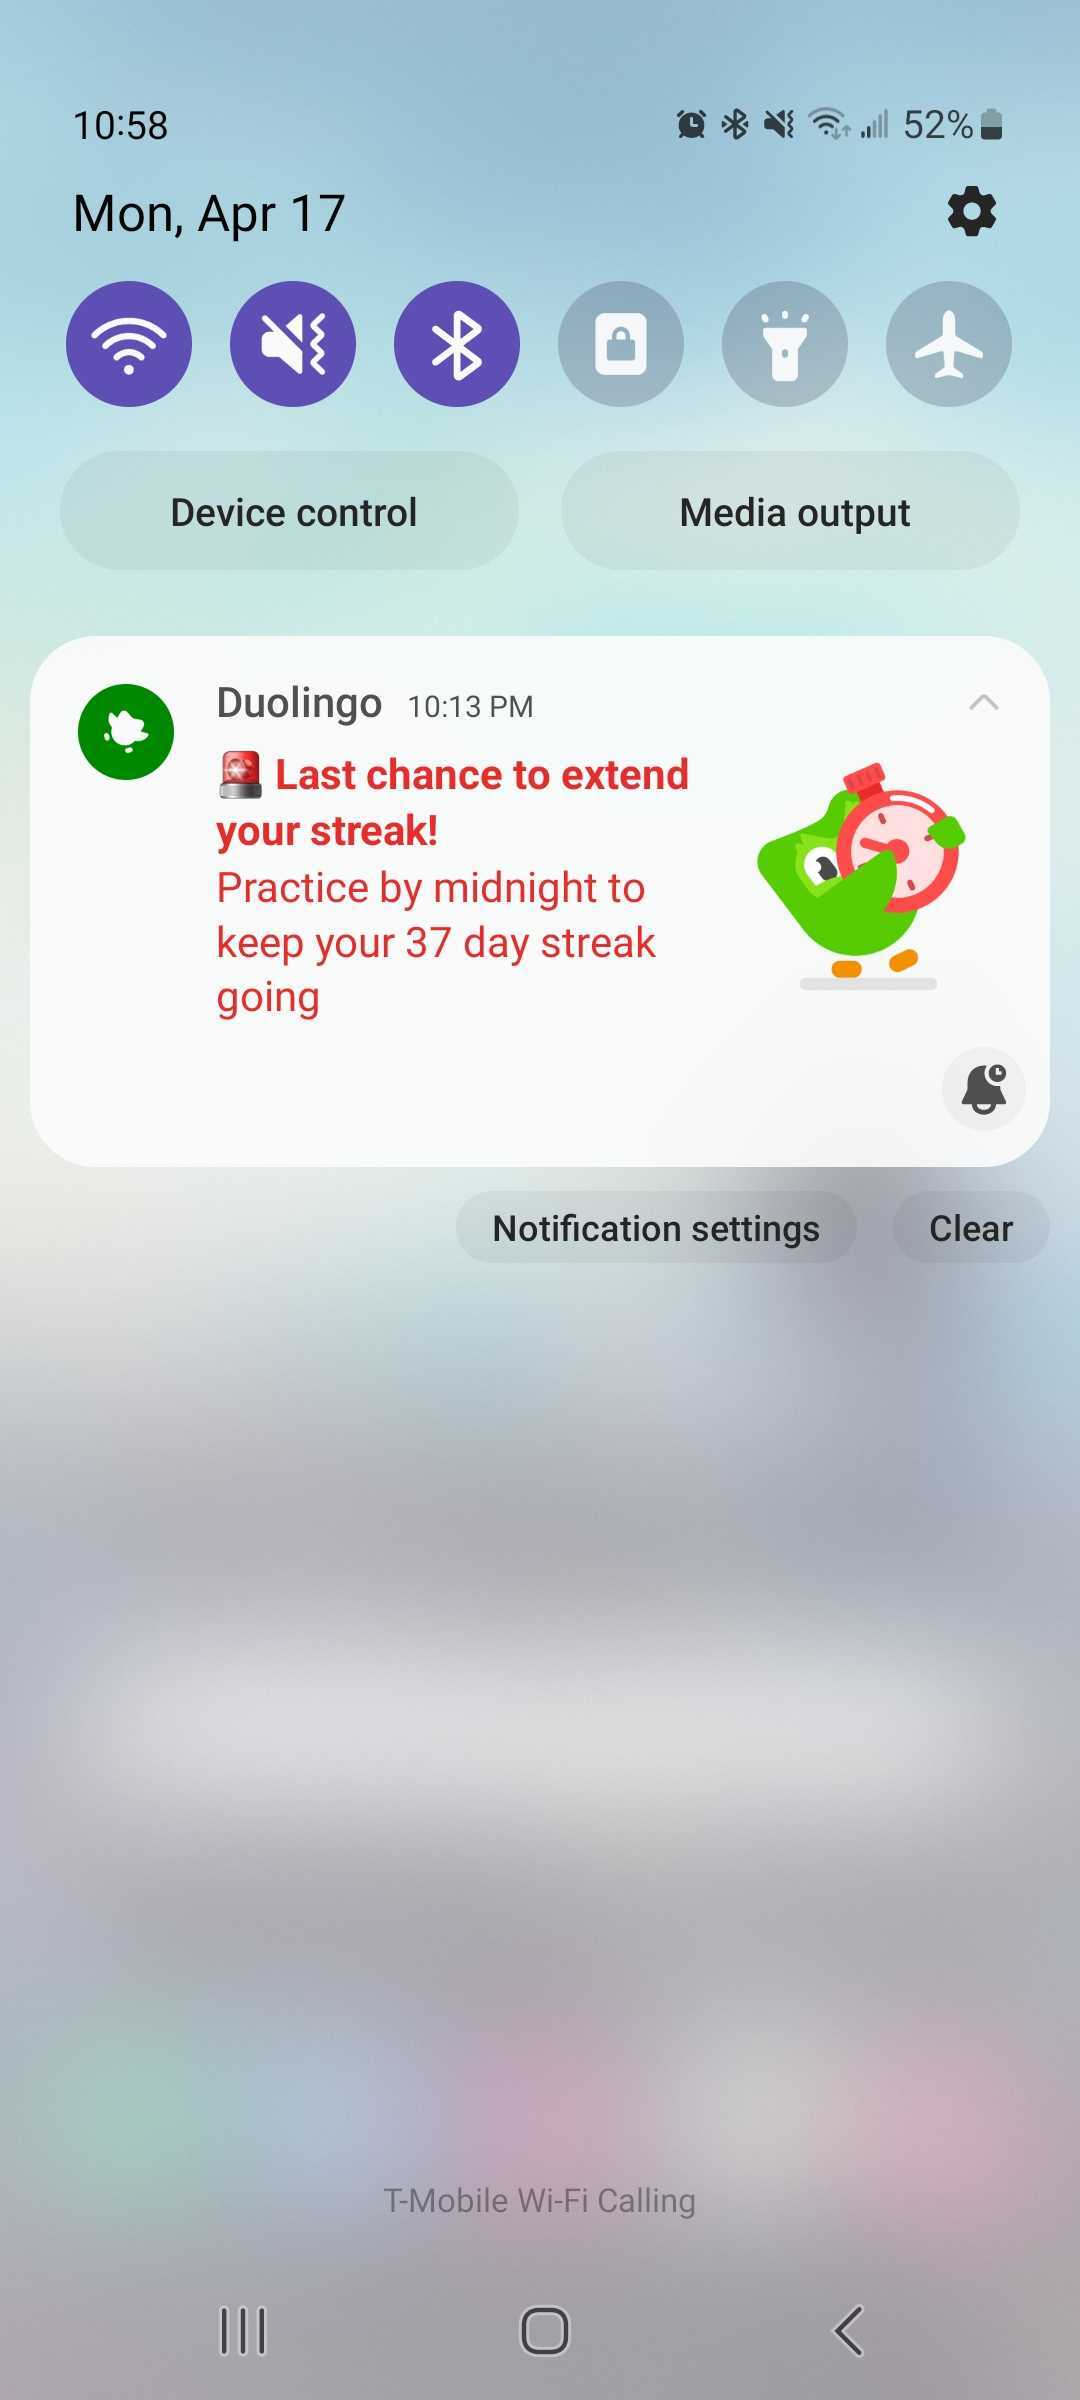 duolingo push notification reminder to practice